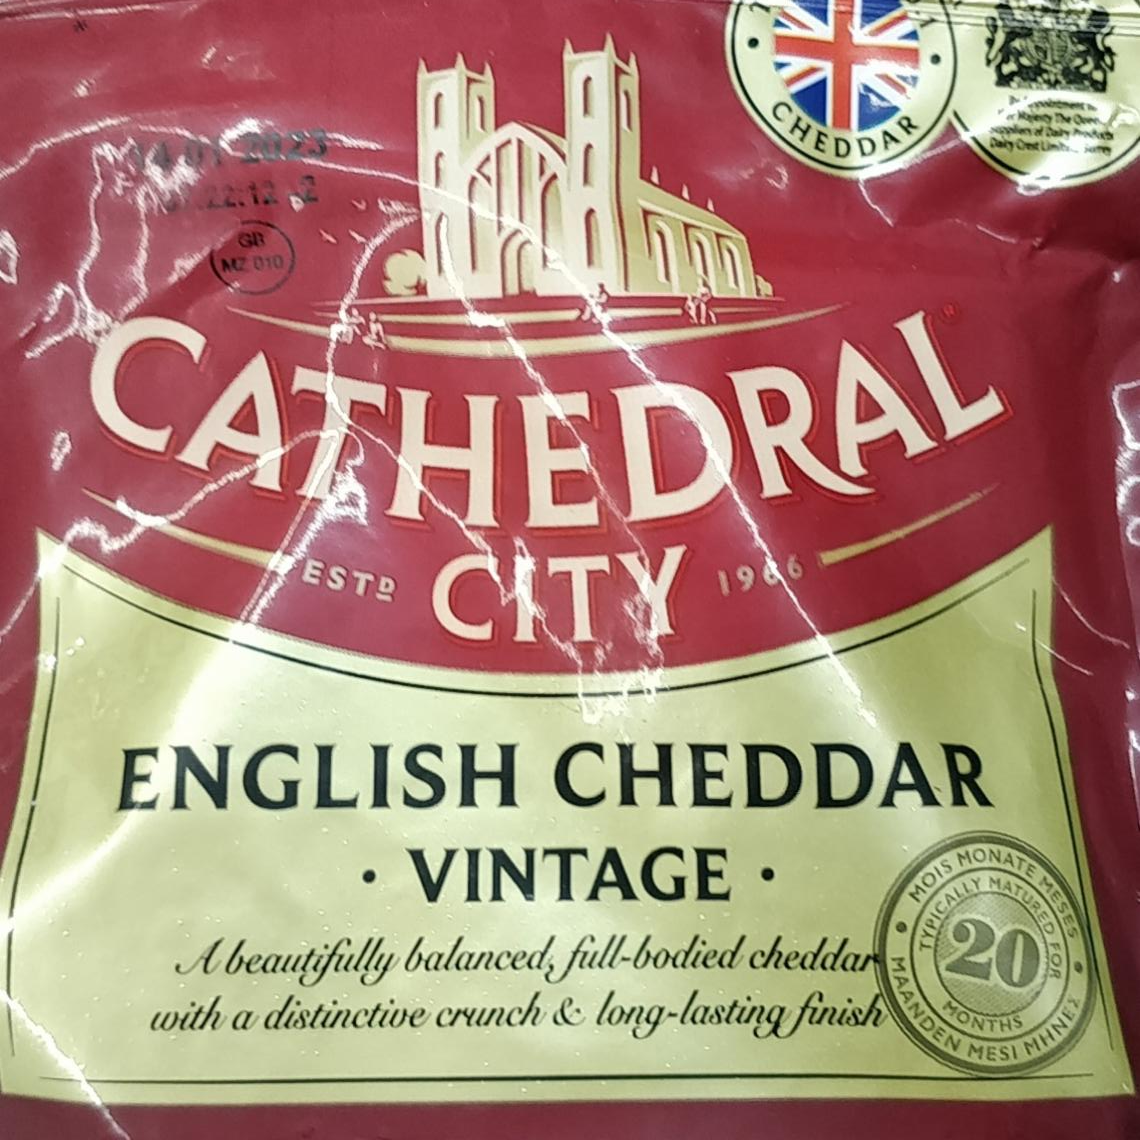 Fotografie - Cathedral city English Cheddar vintage